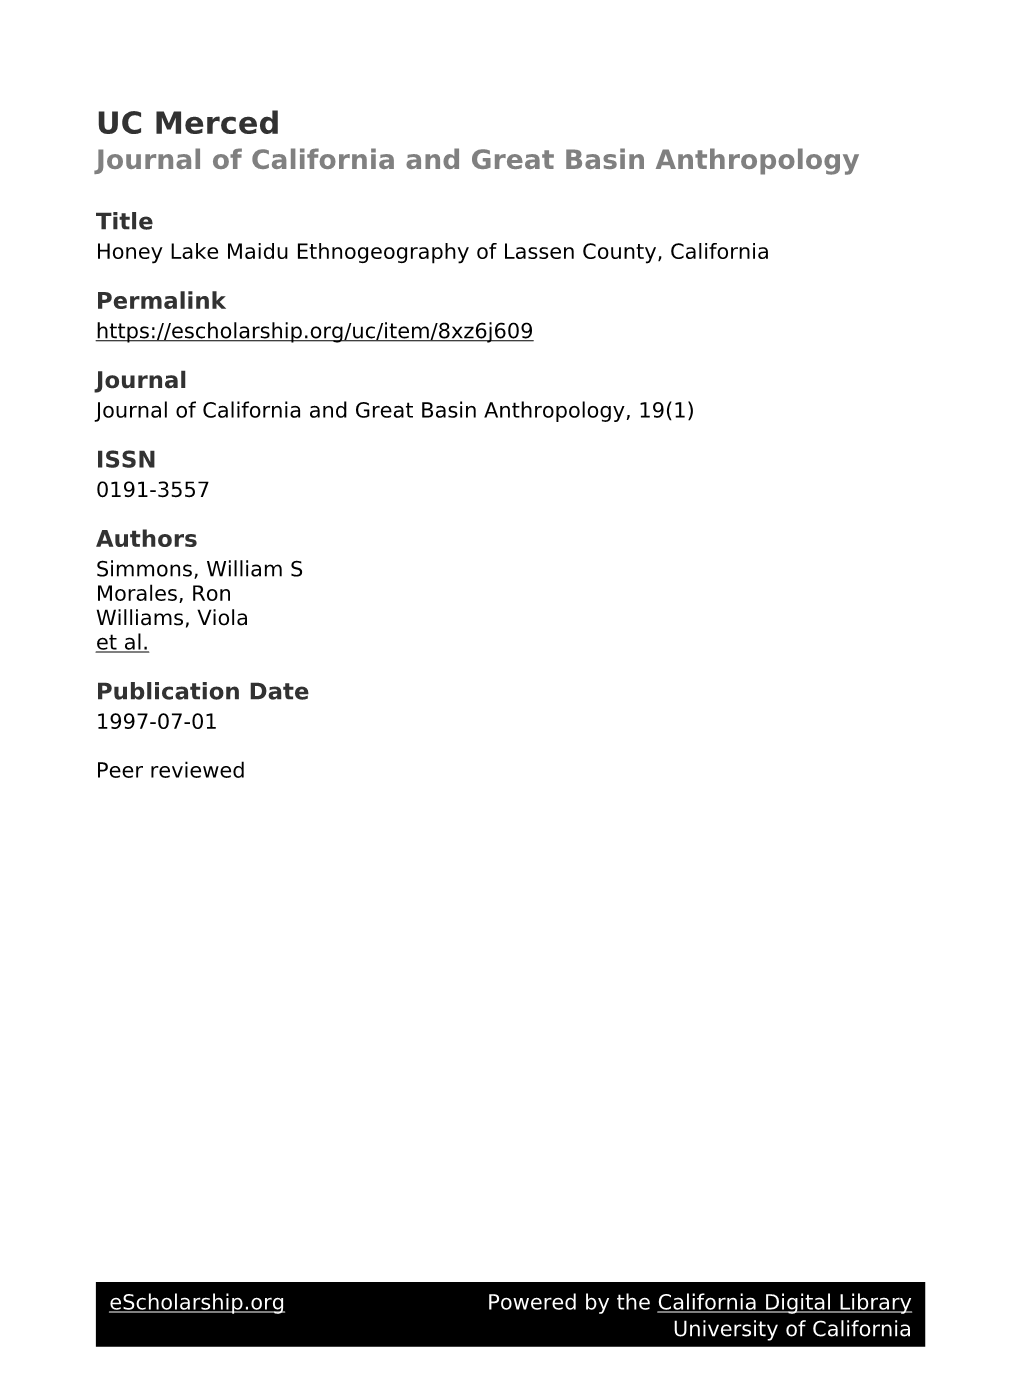 Honey Lake Maidu Ethnogeography of Lassen County, California